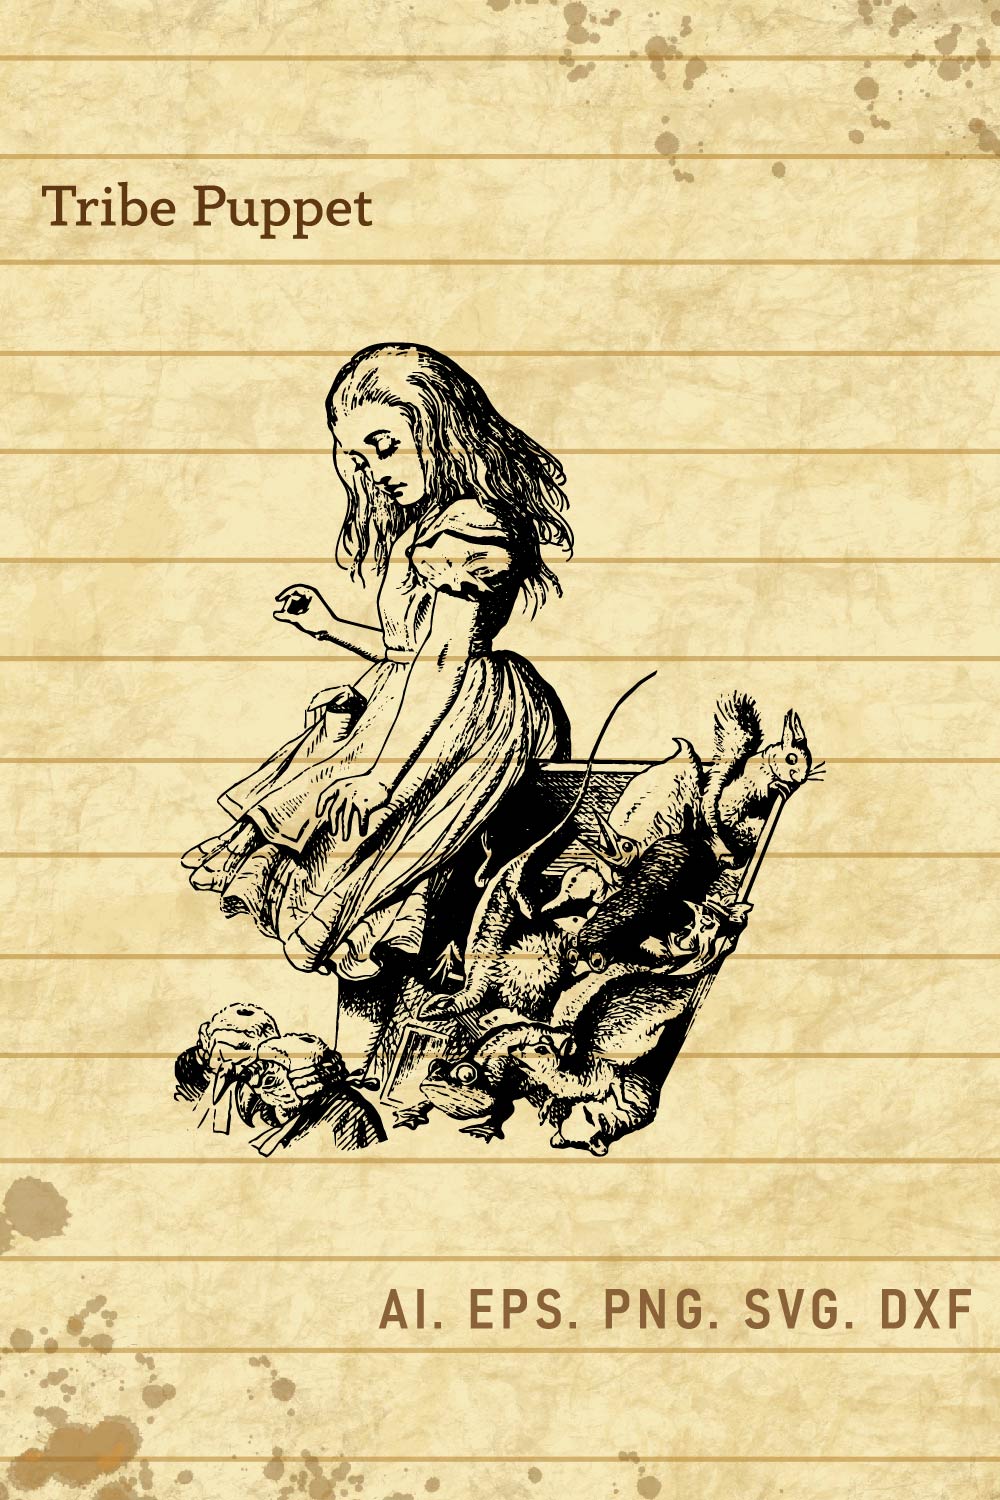 Alice in Wonderland pinterest preview image.